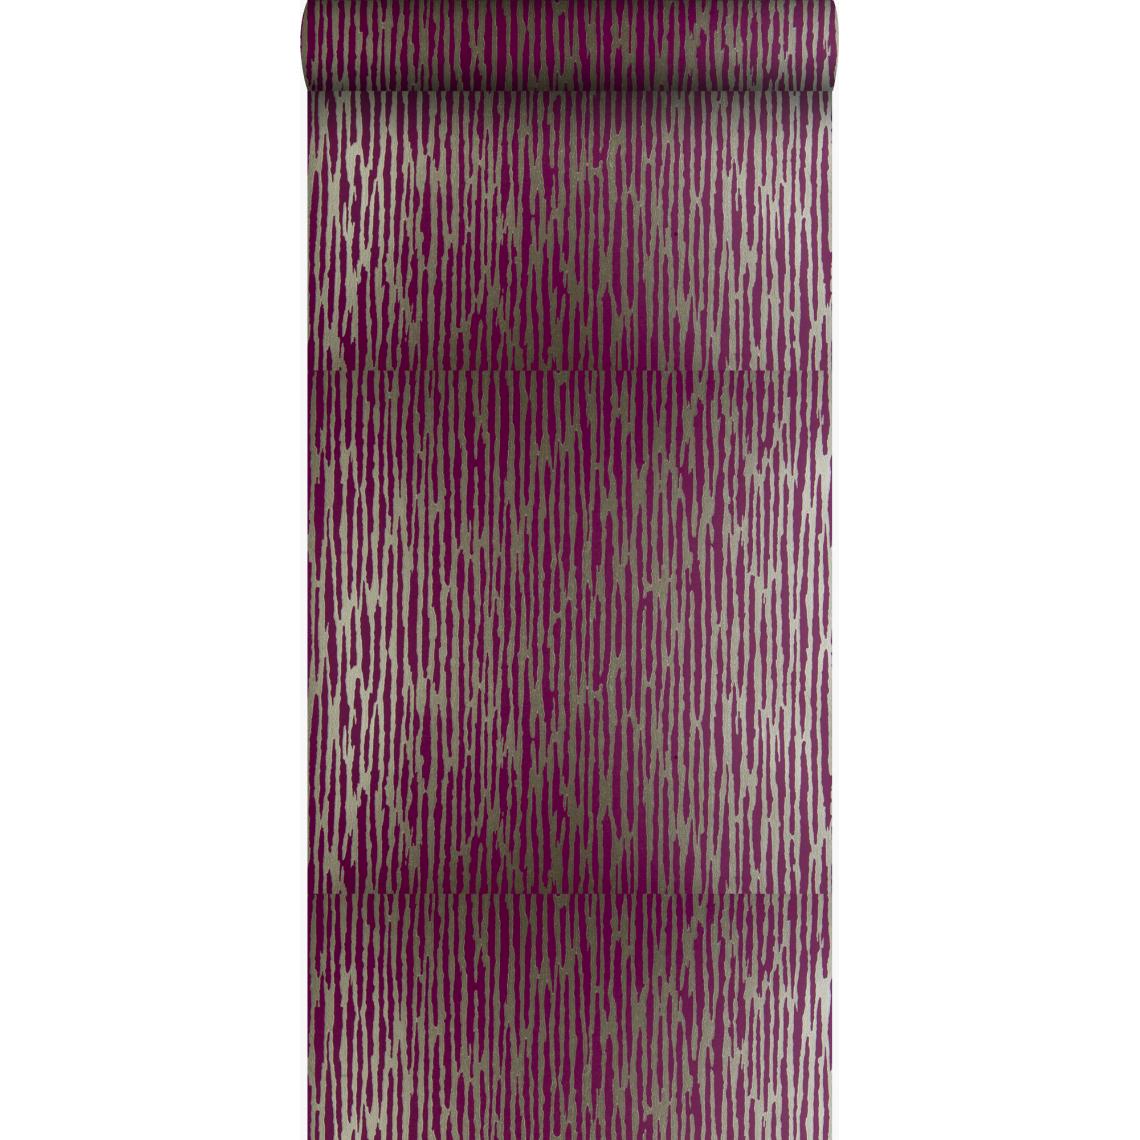 Origin - Origin papier peint camouflage violet aubergine - 307111 - 52 cm x 10,05 m - Papier peint